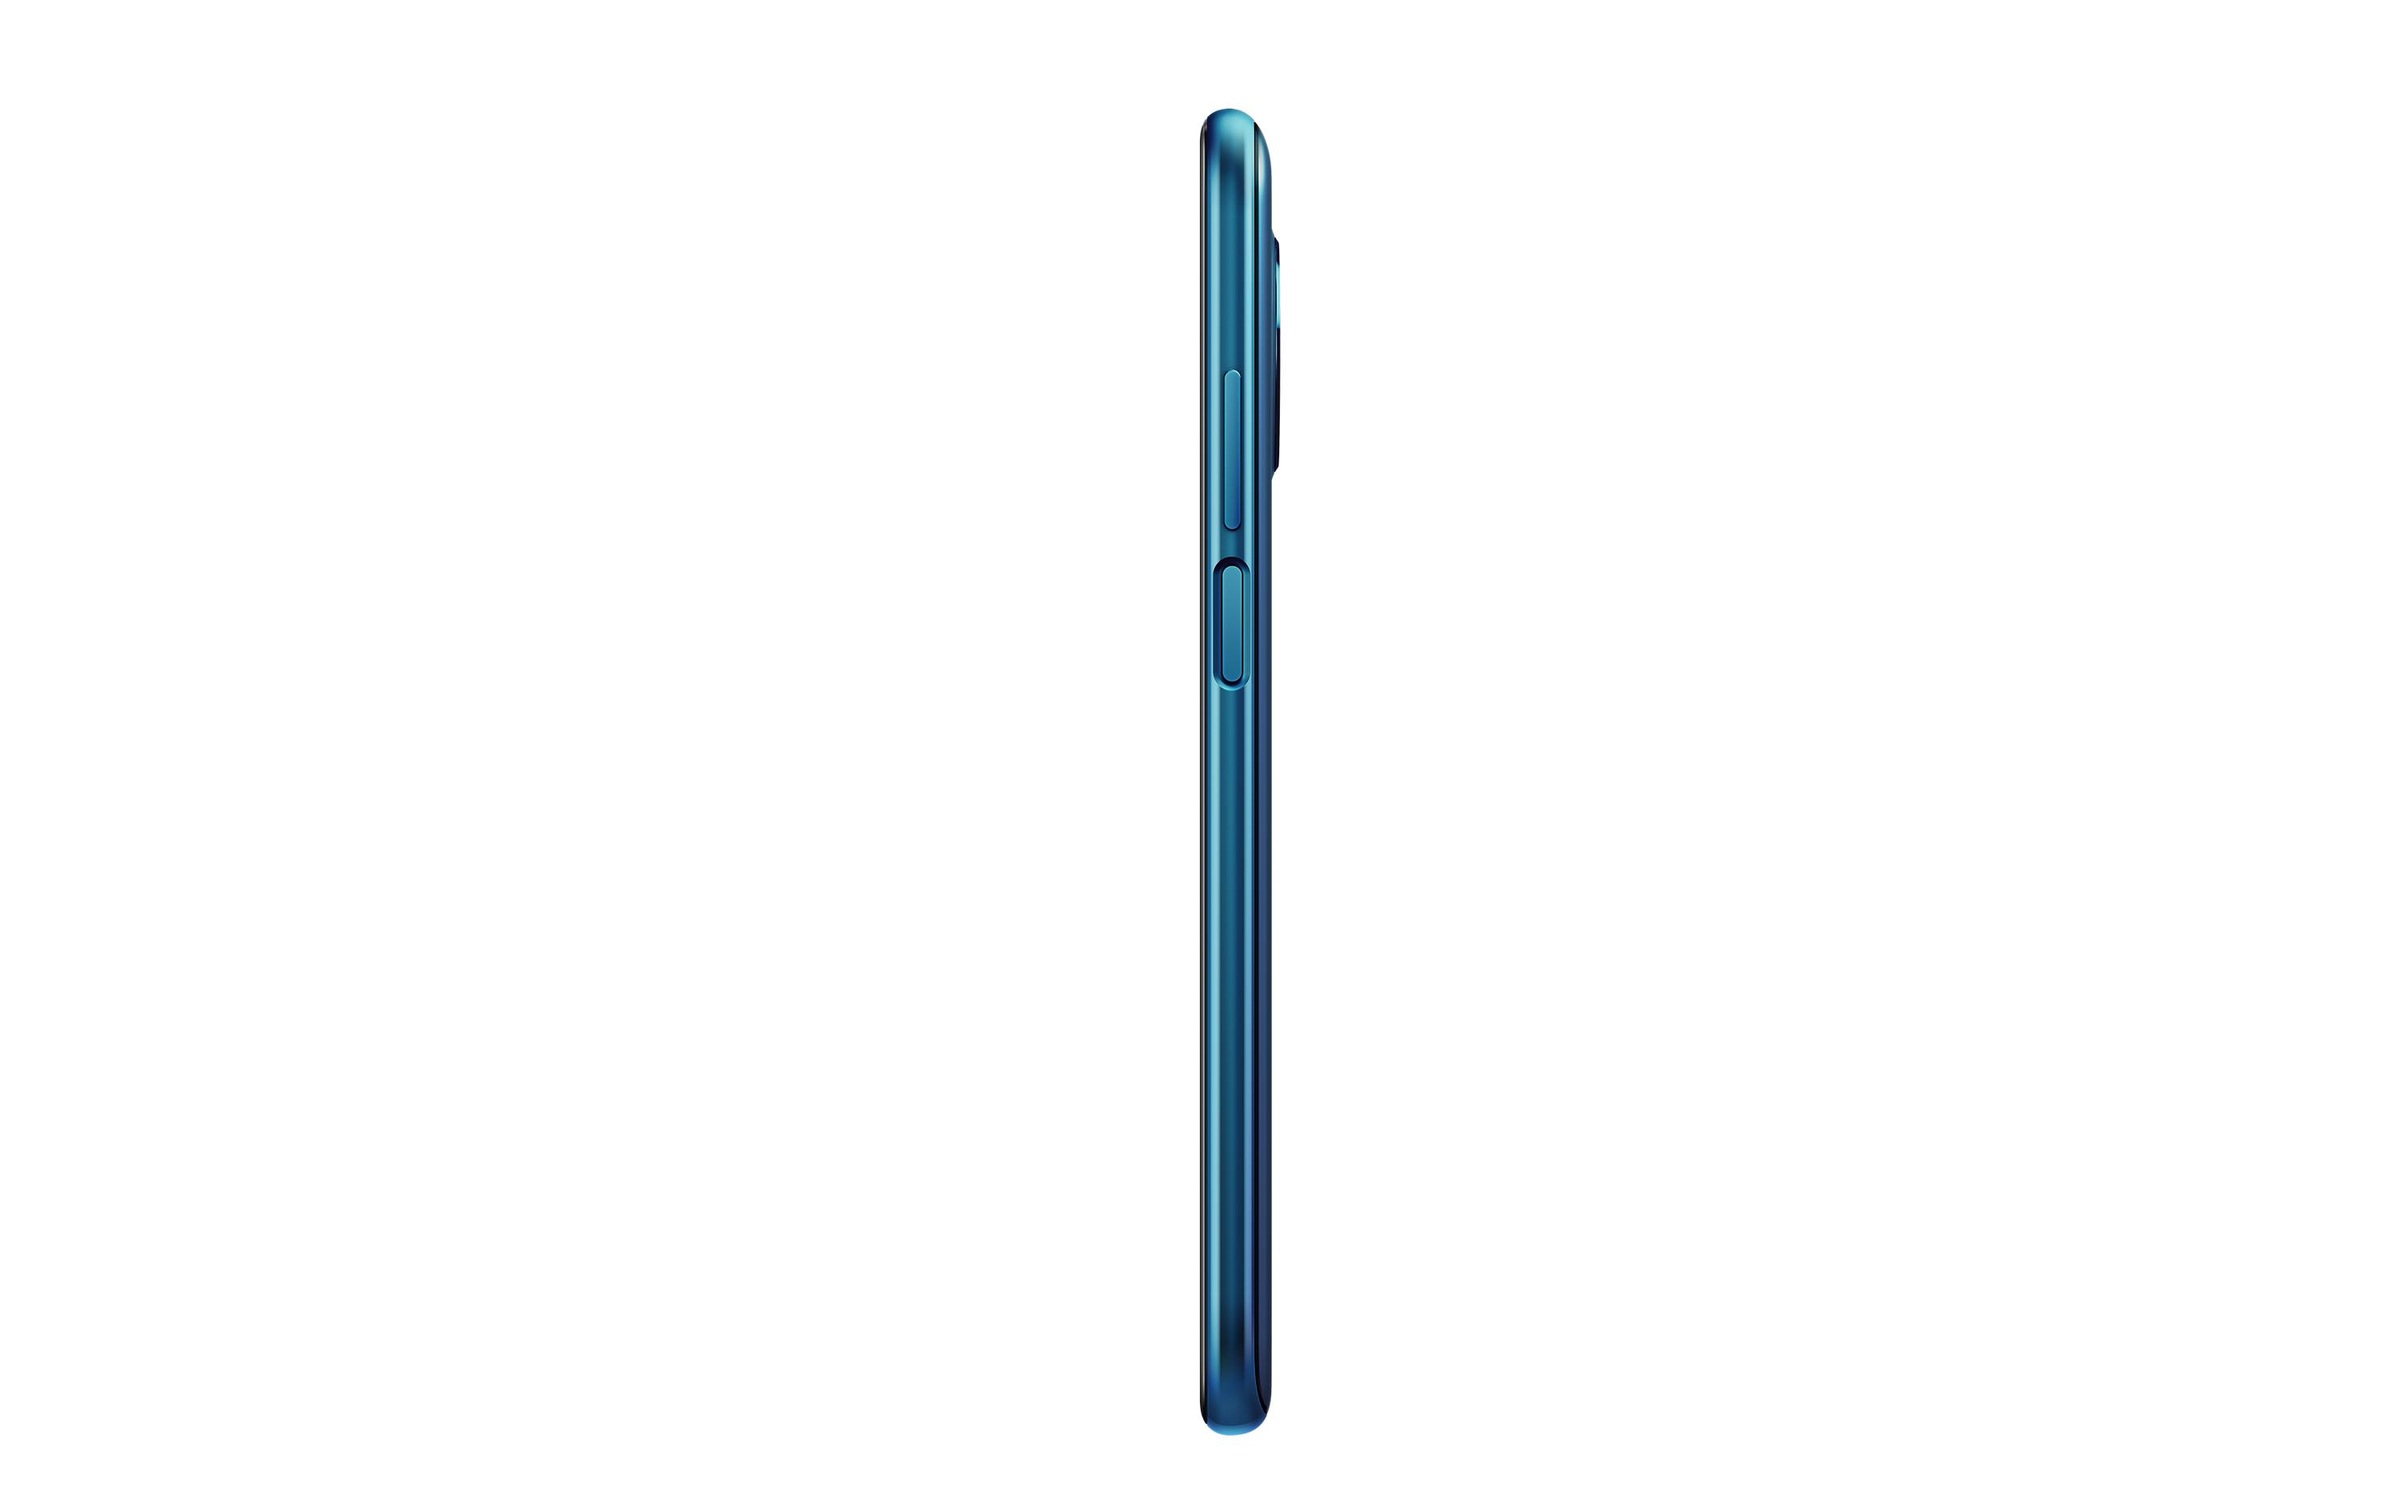 Nokia Smartphone »X20 128 GB Nordic blue«, Blau, 16,94 cm/6,67 Zoll, 64 MP Kamera